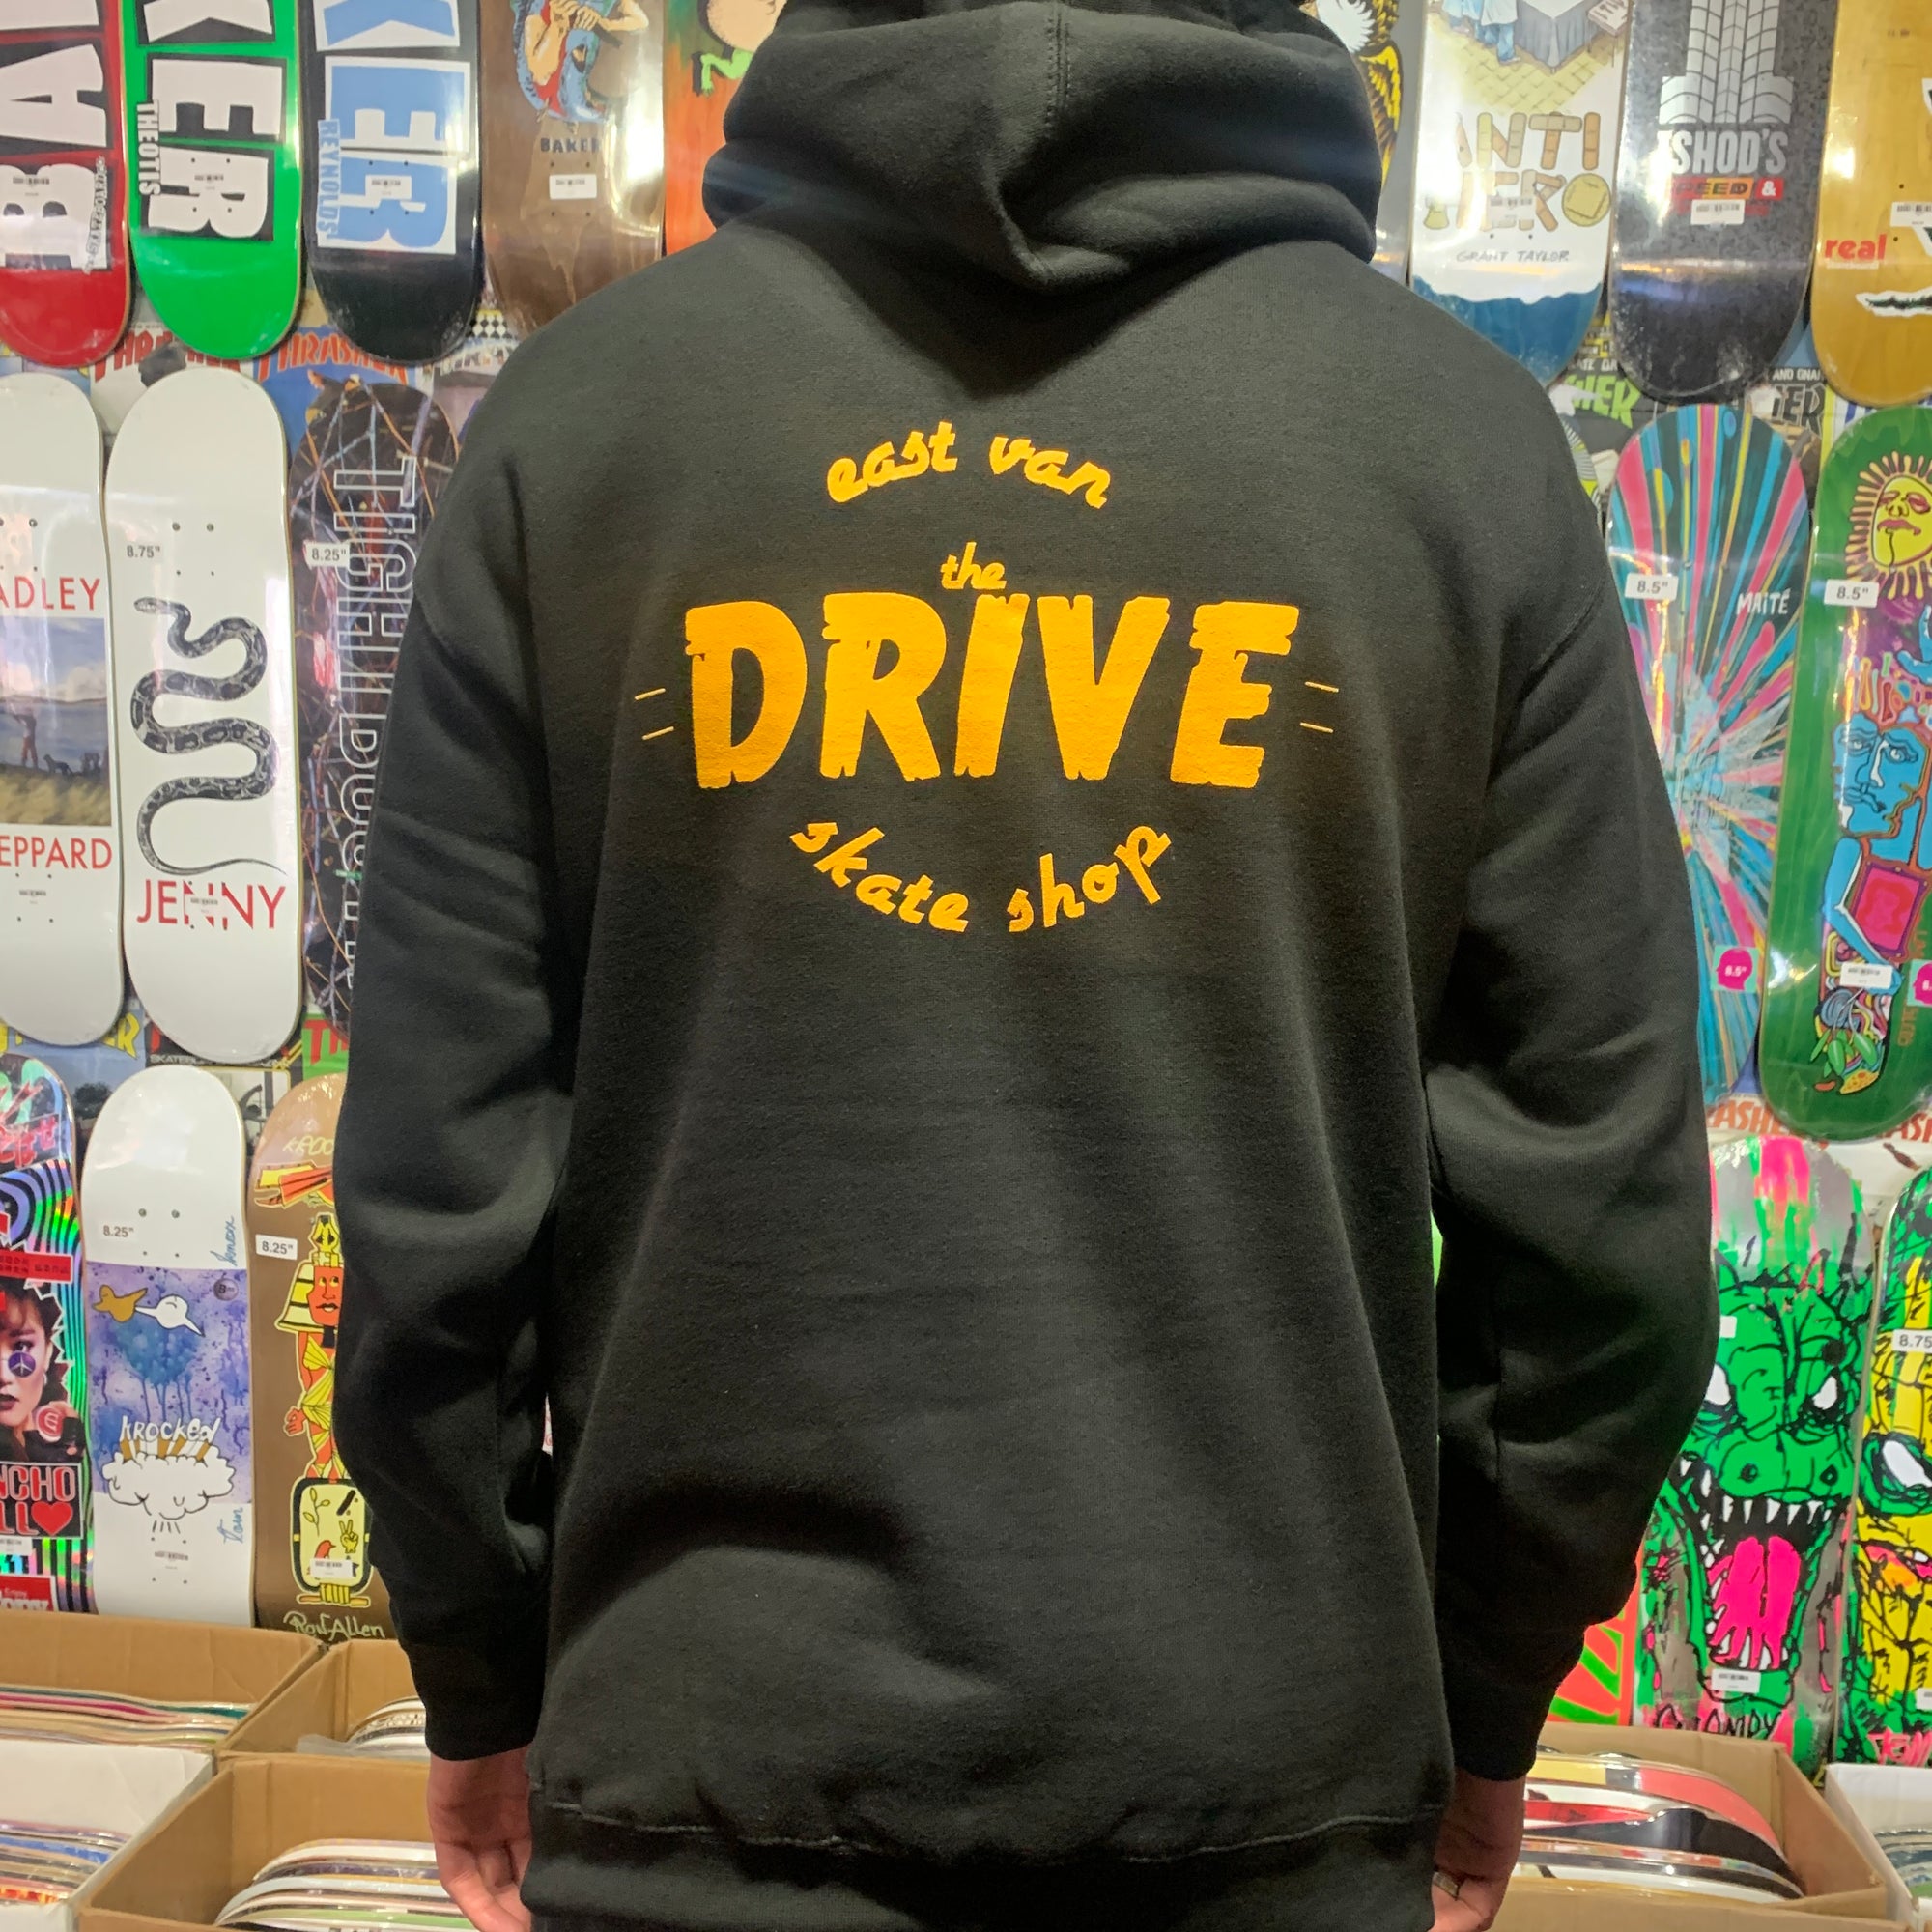 THE DRIVE SKATE SHOP LOGO HOODIE BLACK/GOLD - The Drive Skateshop